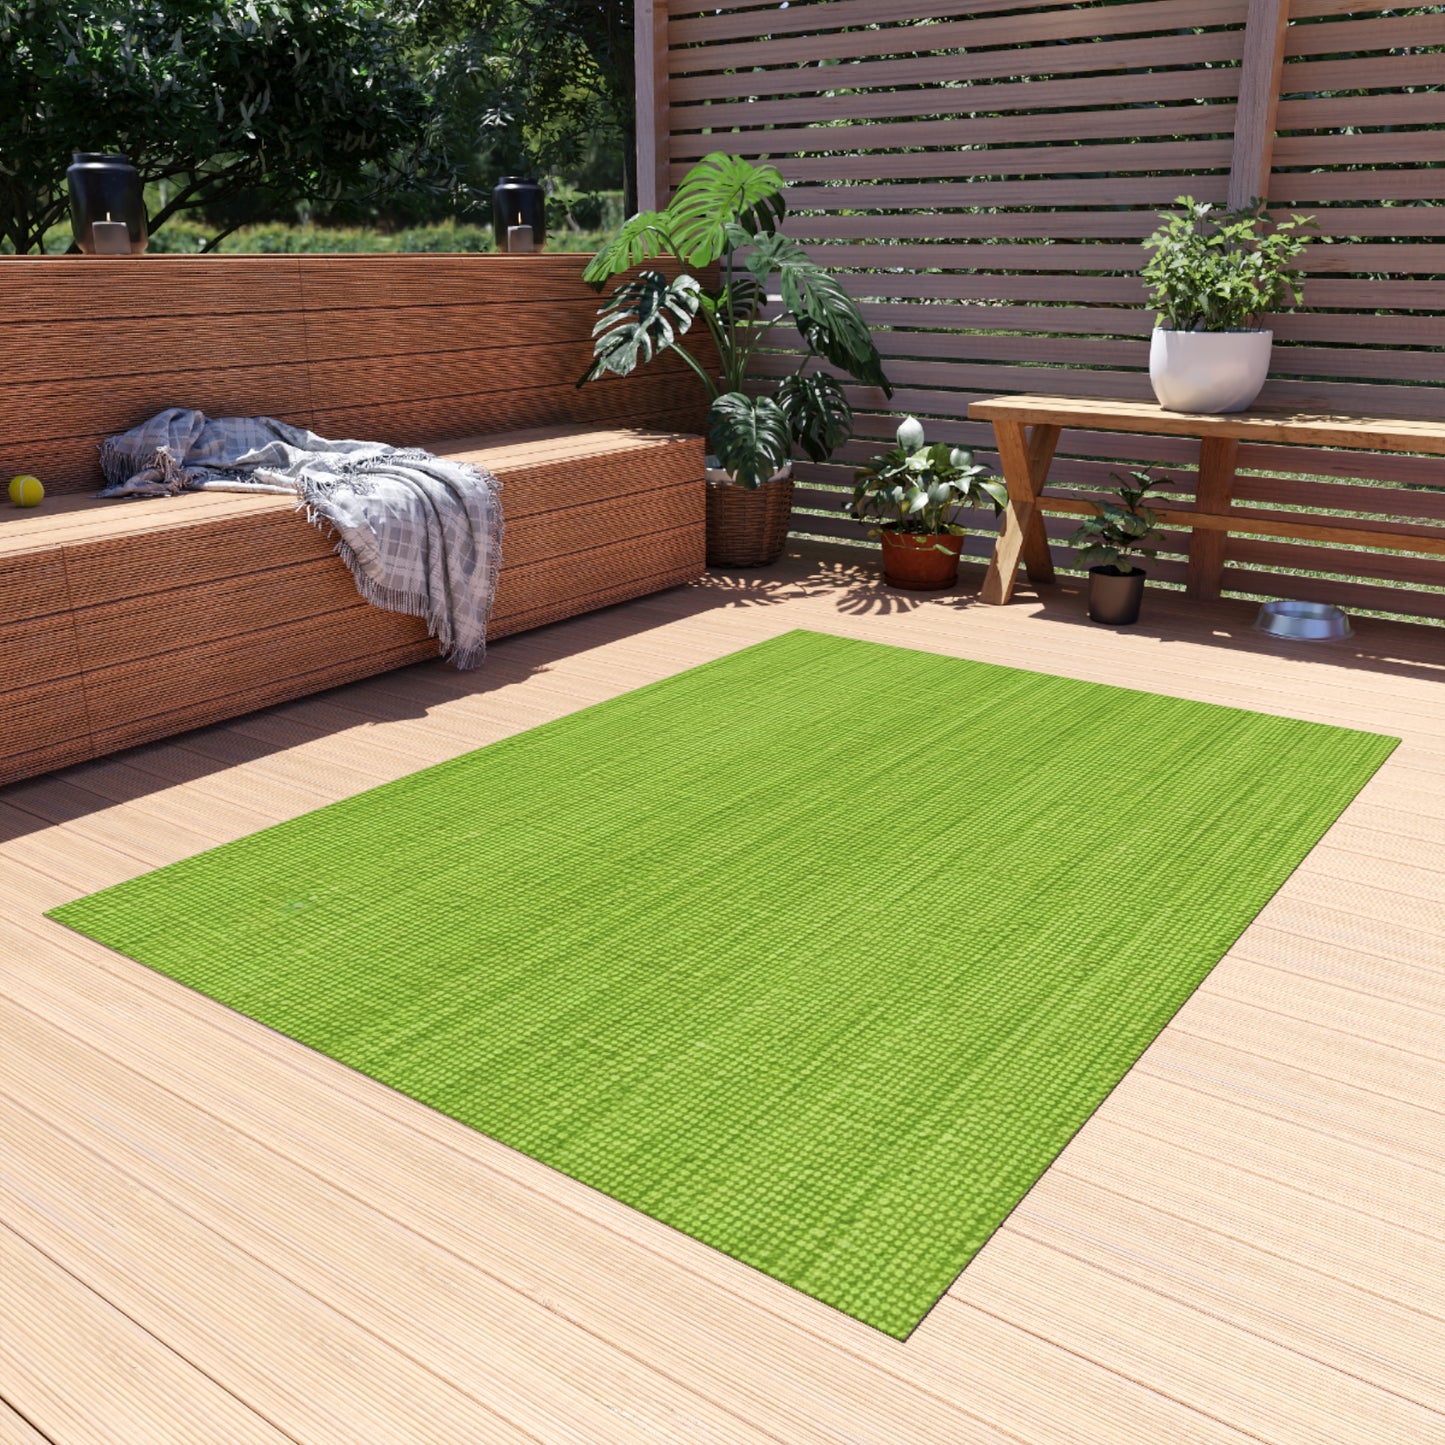 Lush Grass Neon Green: Denim-Inspired, Springtime Fabric Style - Outdoor Rug